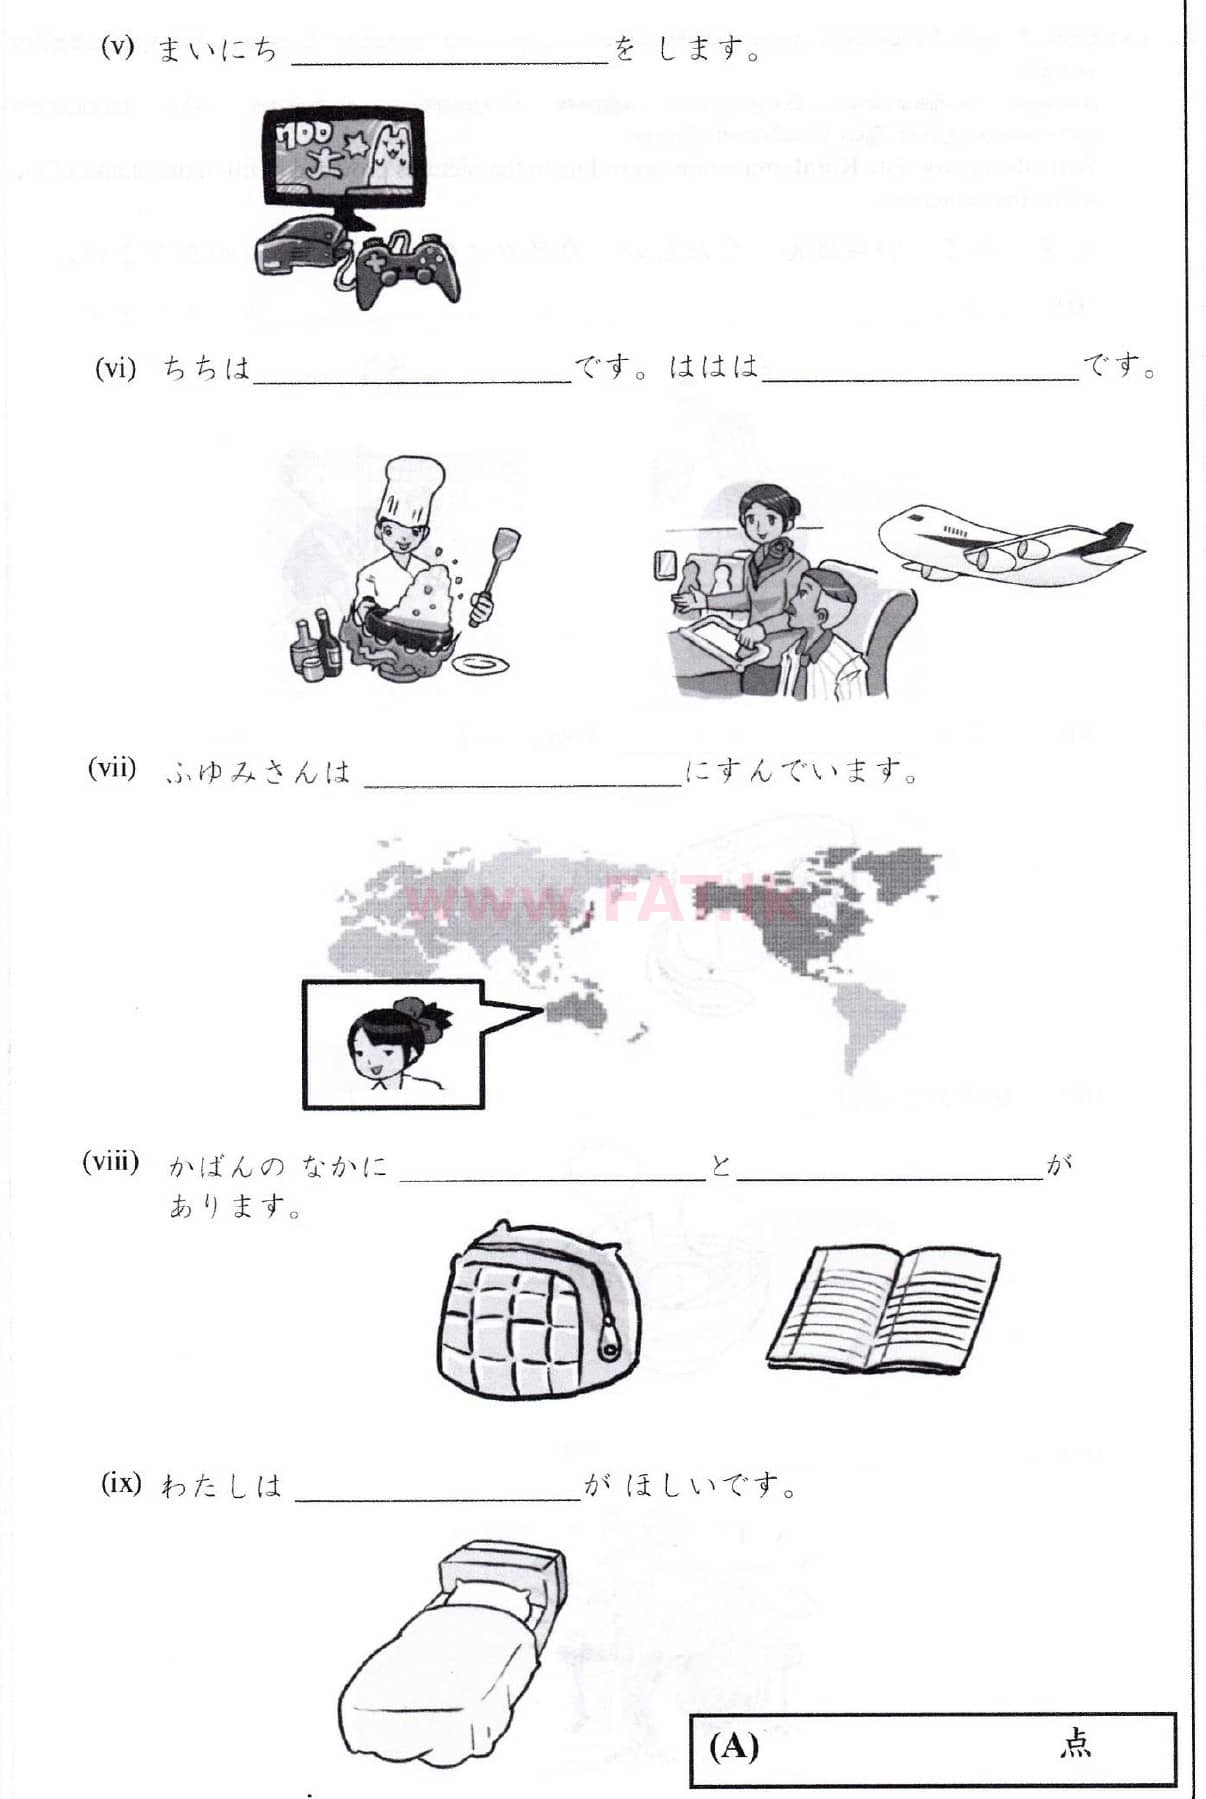 National Syllabus : Ordinary Level (O/L) Japanese Language - 2019 December - Paper (සිංහල Medium) 3 2